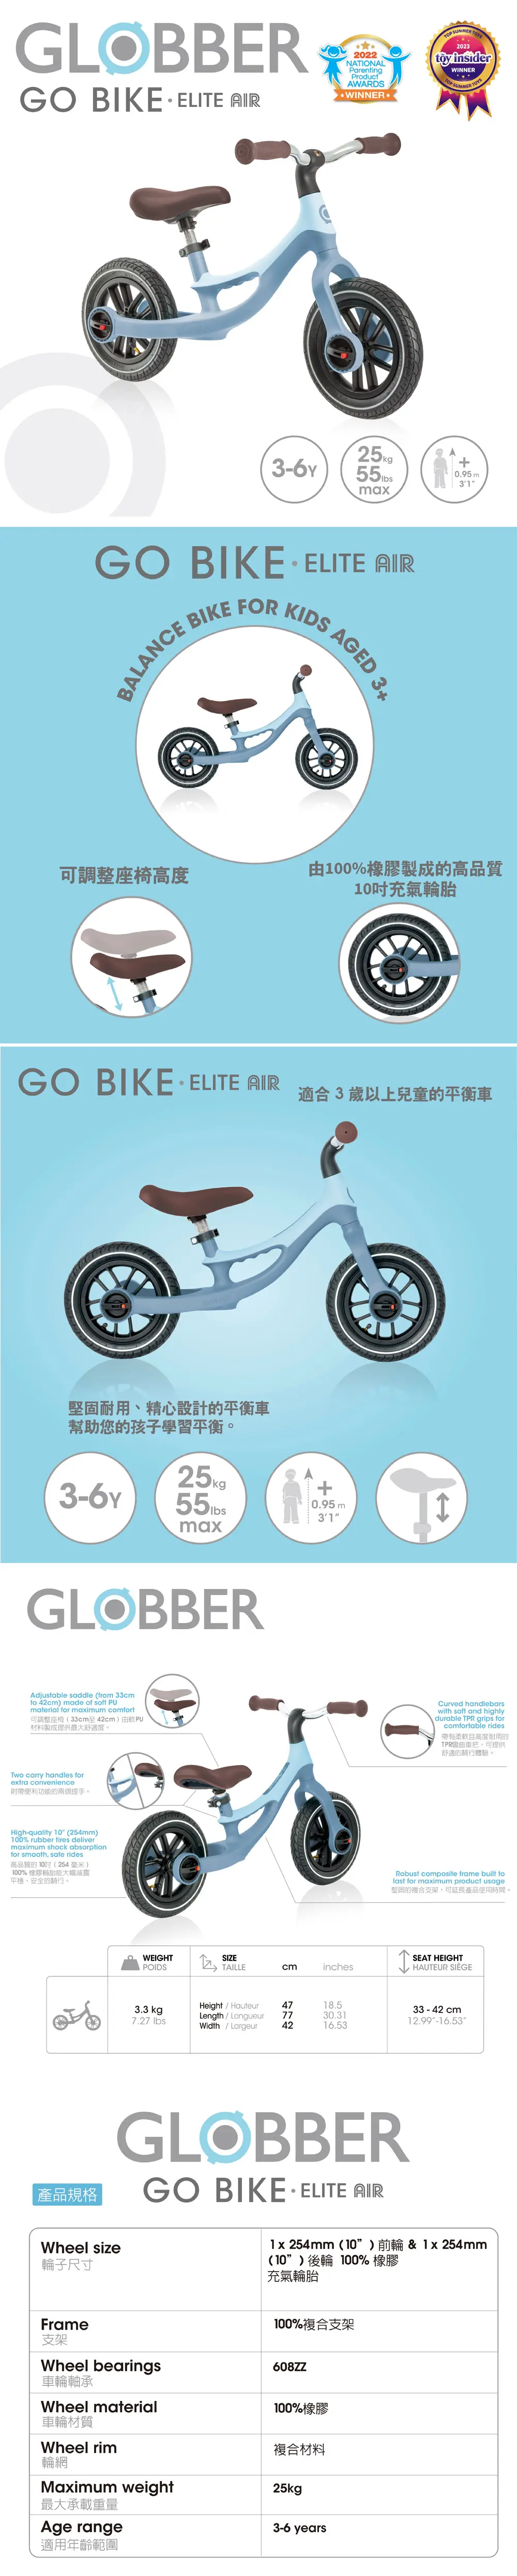 Globber GO Bike Elite Air 幼儿平衡单车